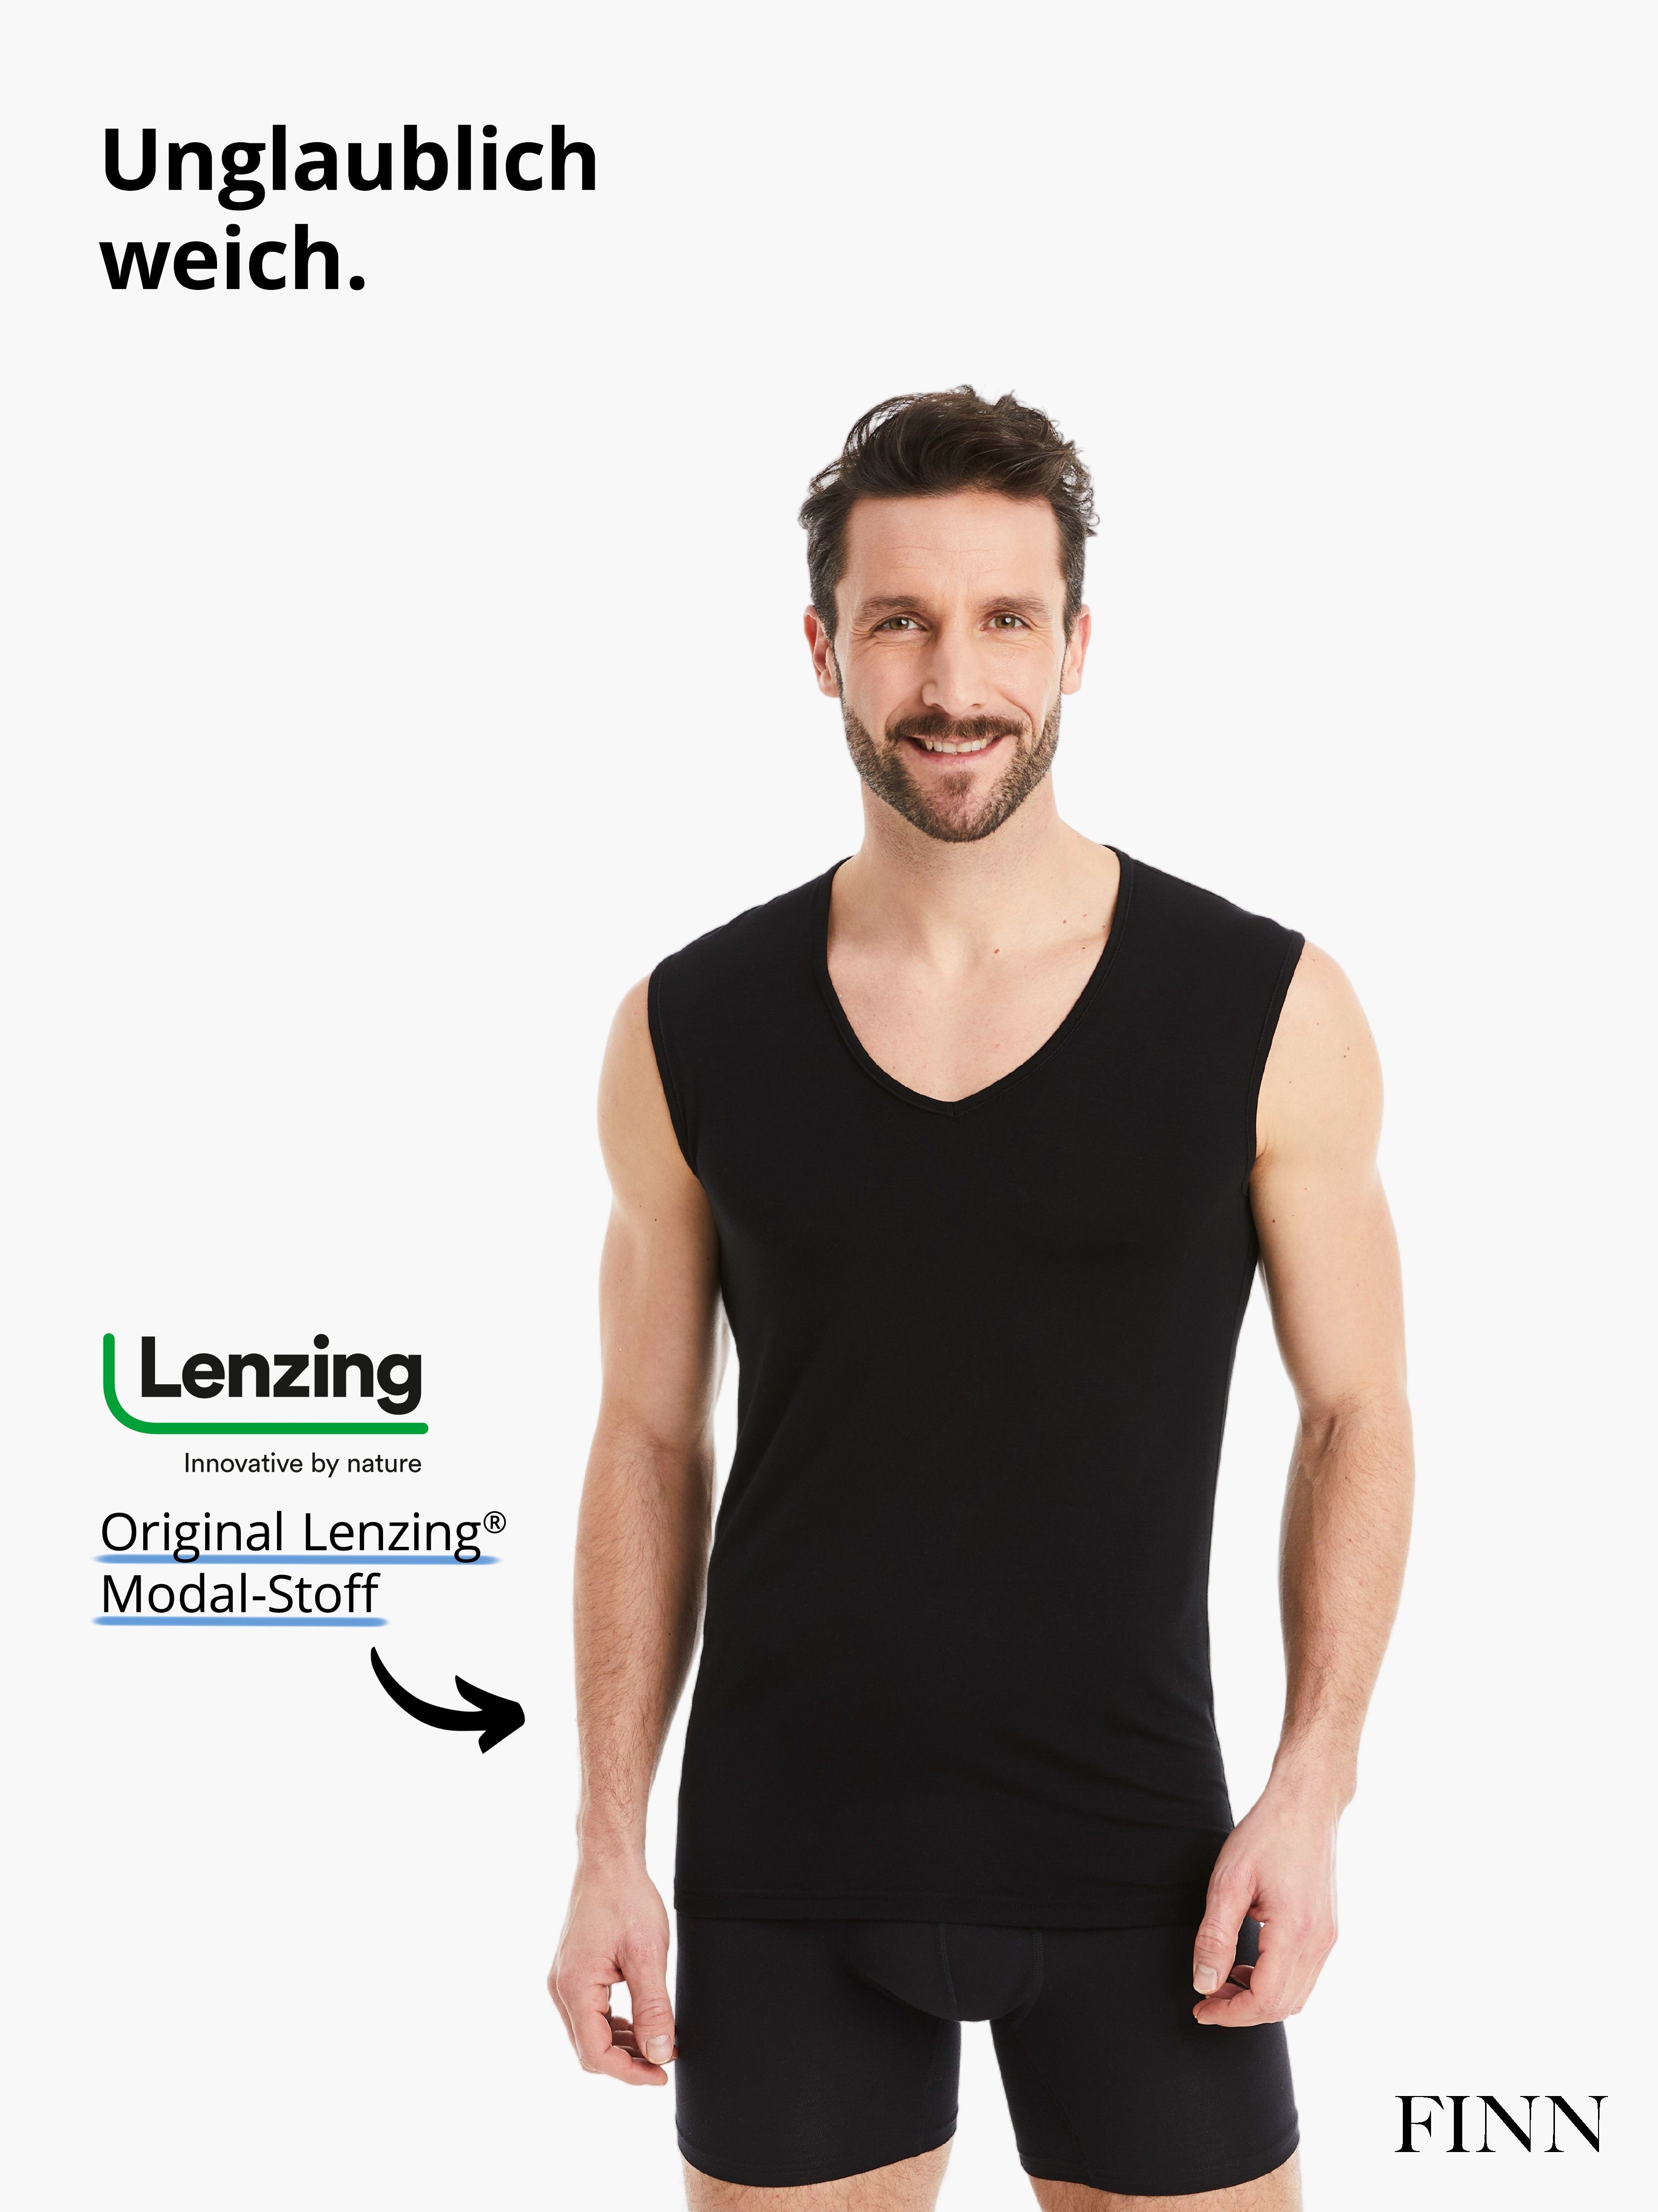 FINN Design Achselhemd Business Unterhemd Ärmellos mit V-Ausschnitt Herren  feiner Micro-Modal Stoff, maximaler Tragekomfort